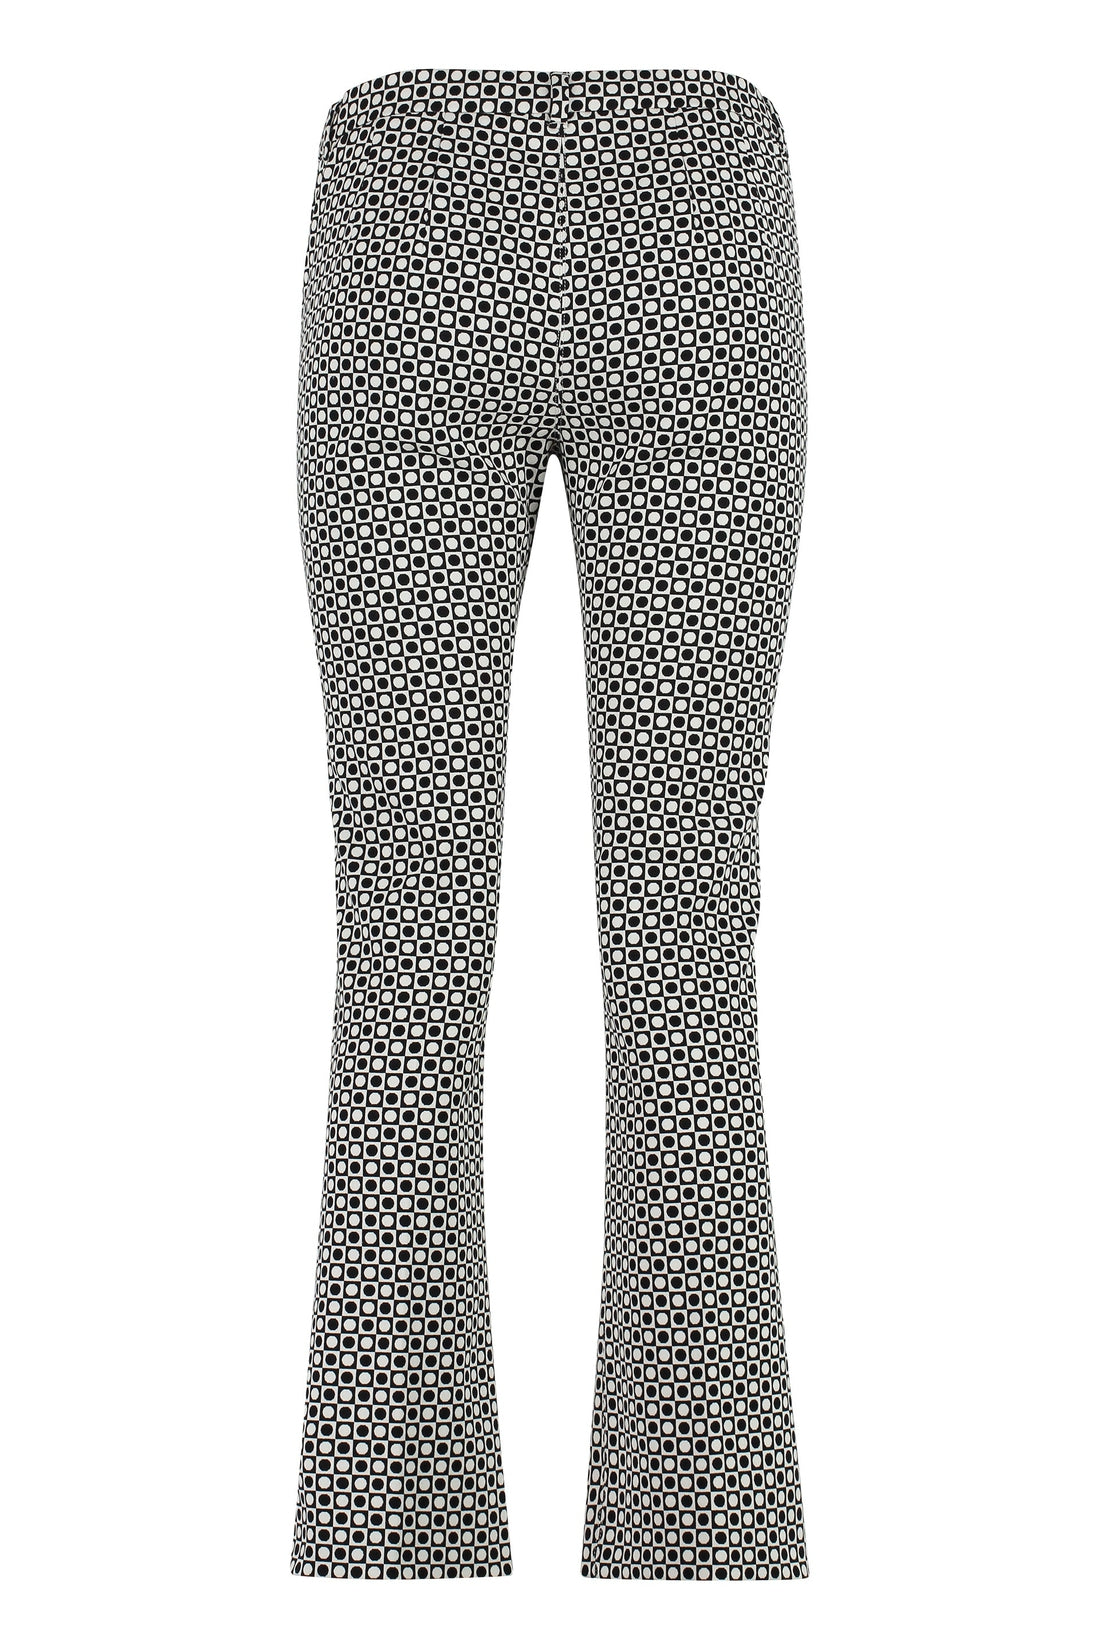 S MAX MARA-OUTLET-SALE-Belford jacquard cotton trousers-ARCHIVIST